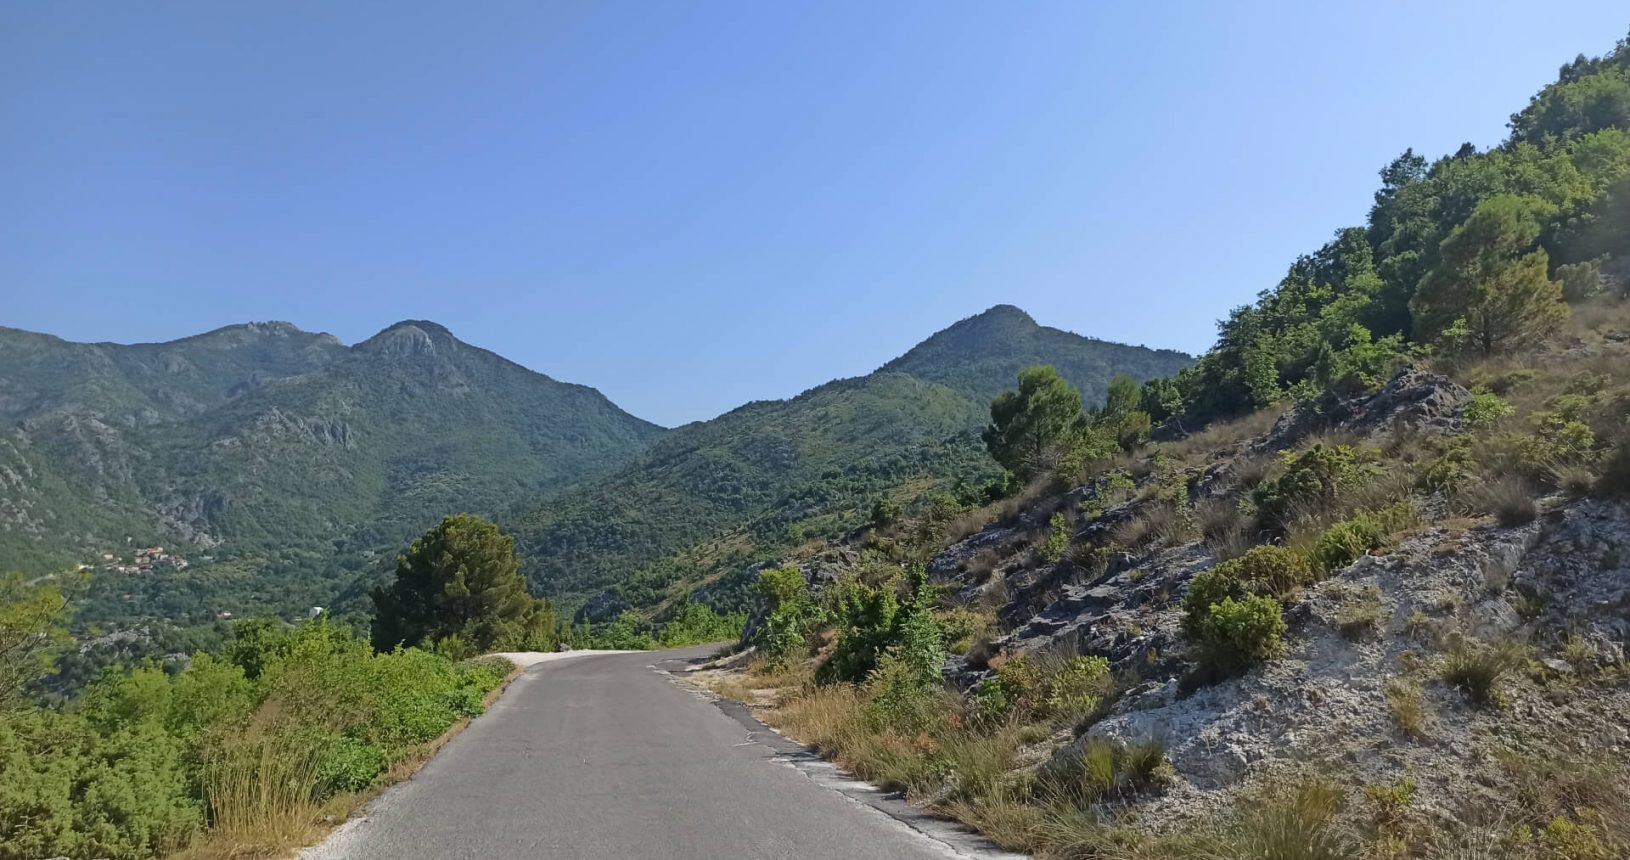 Mountain road along the Skadar lake